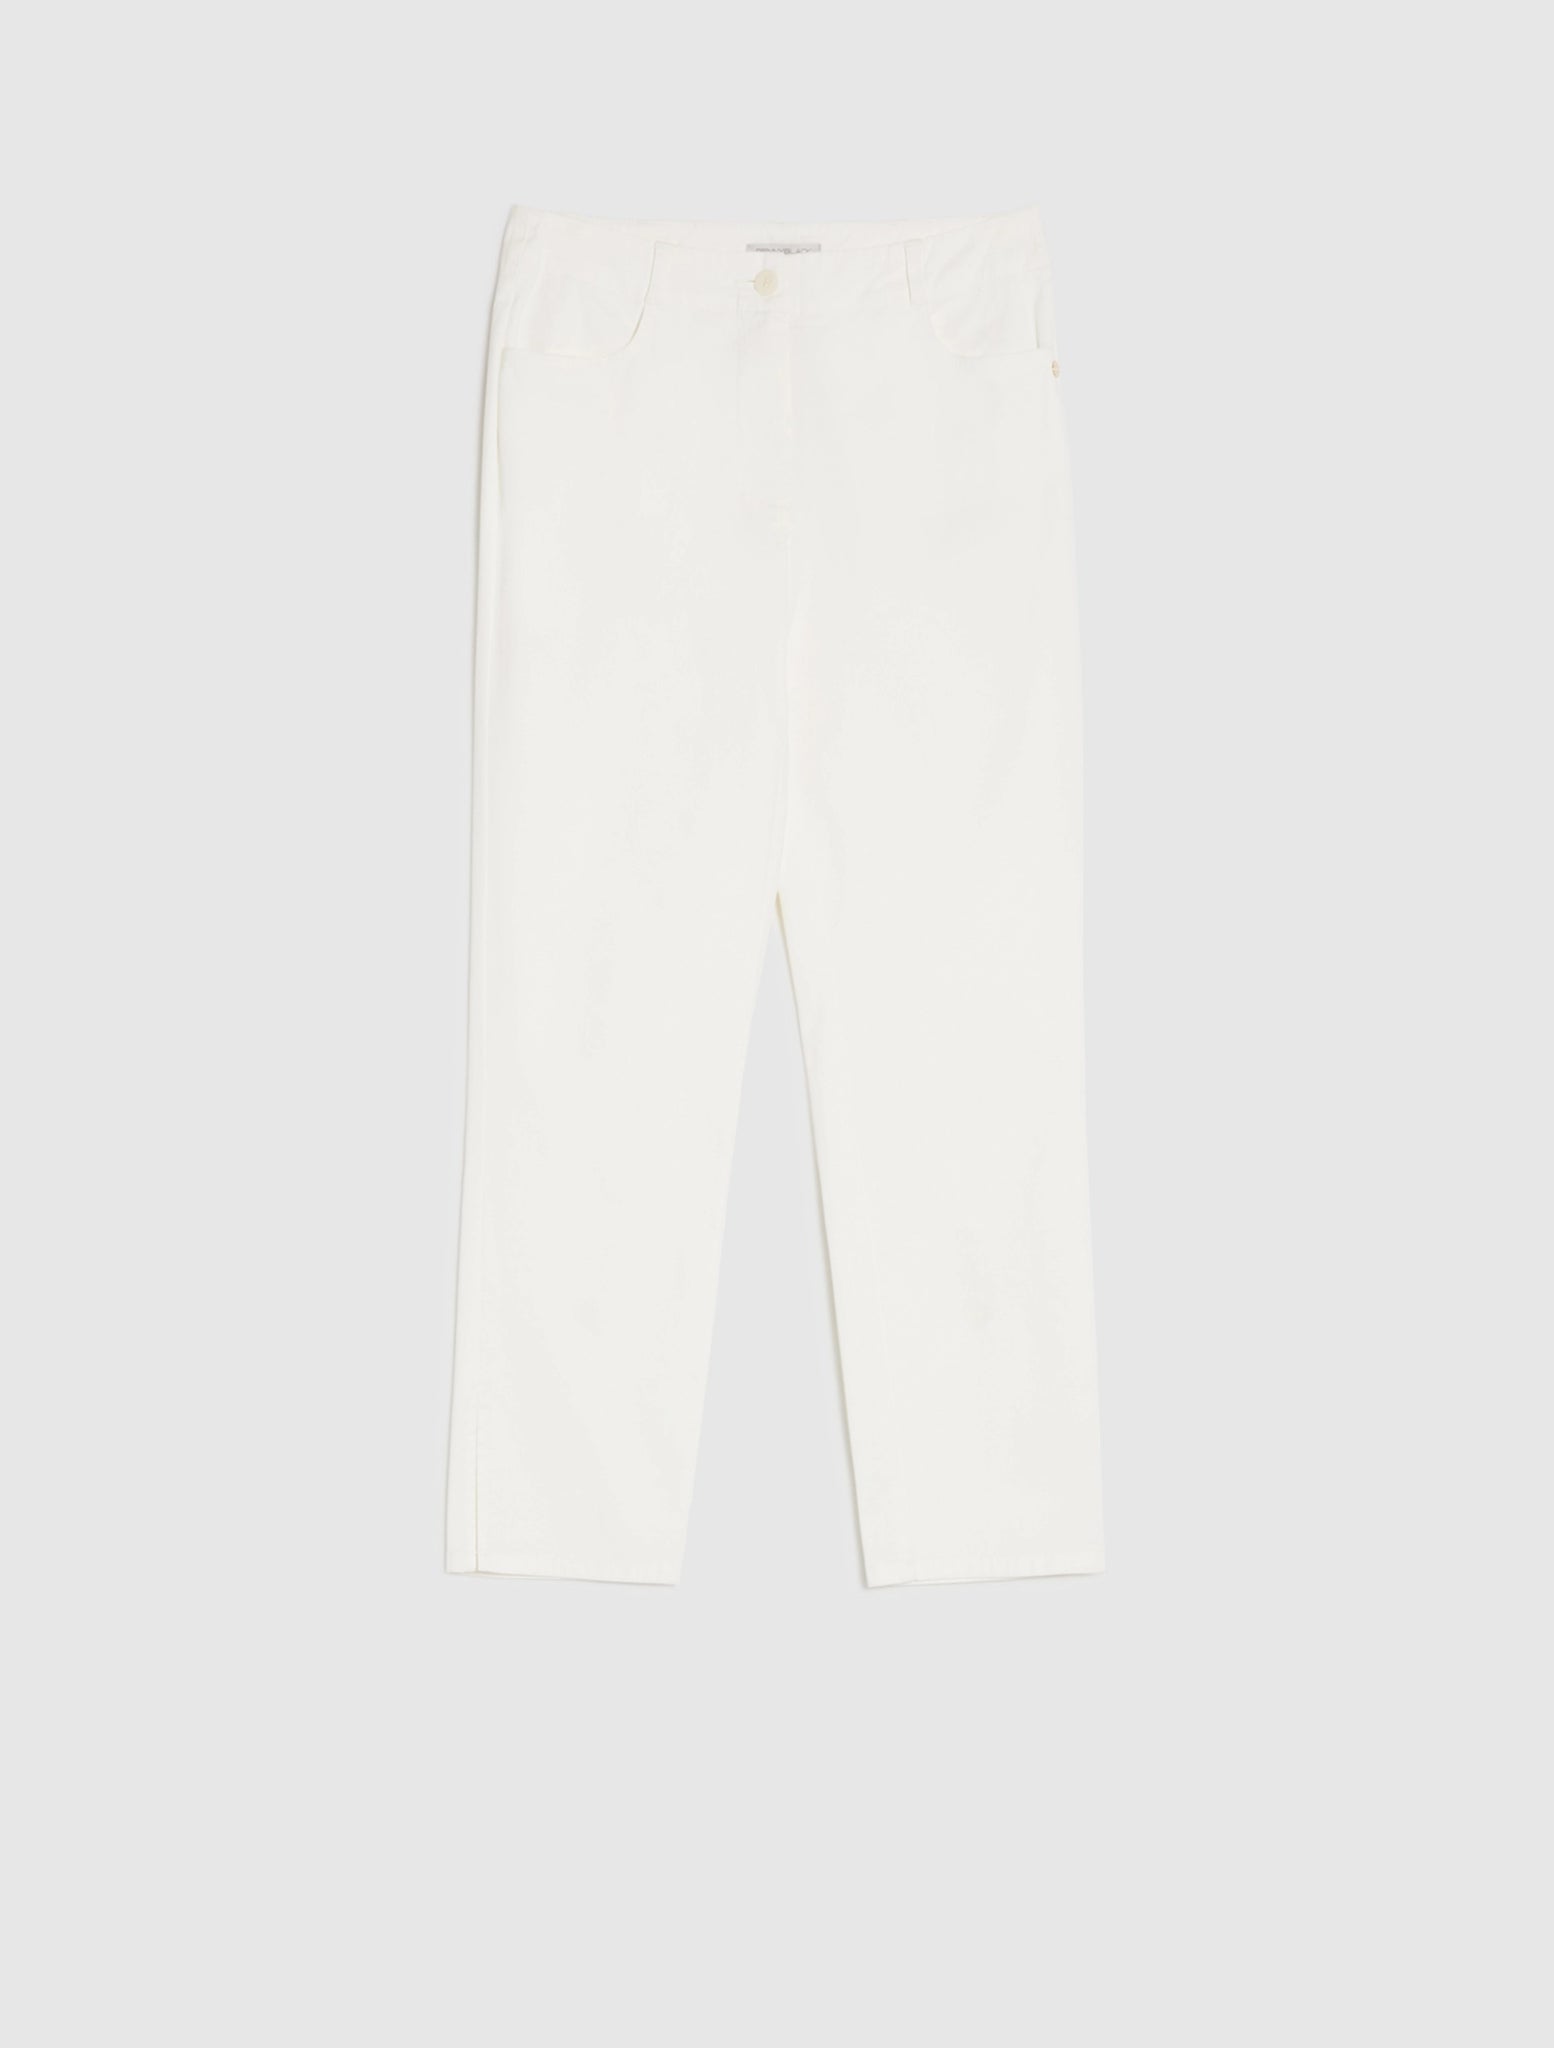 Pantalone Capri Pennyblack / Bianco - Ideal Moda